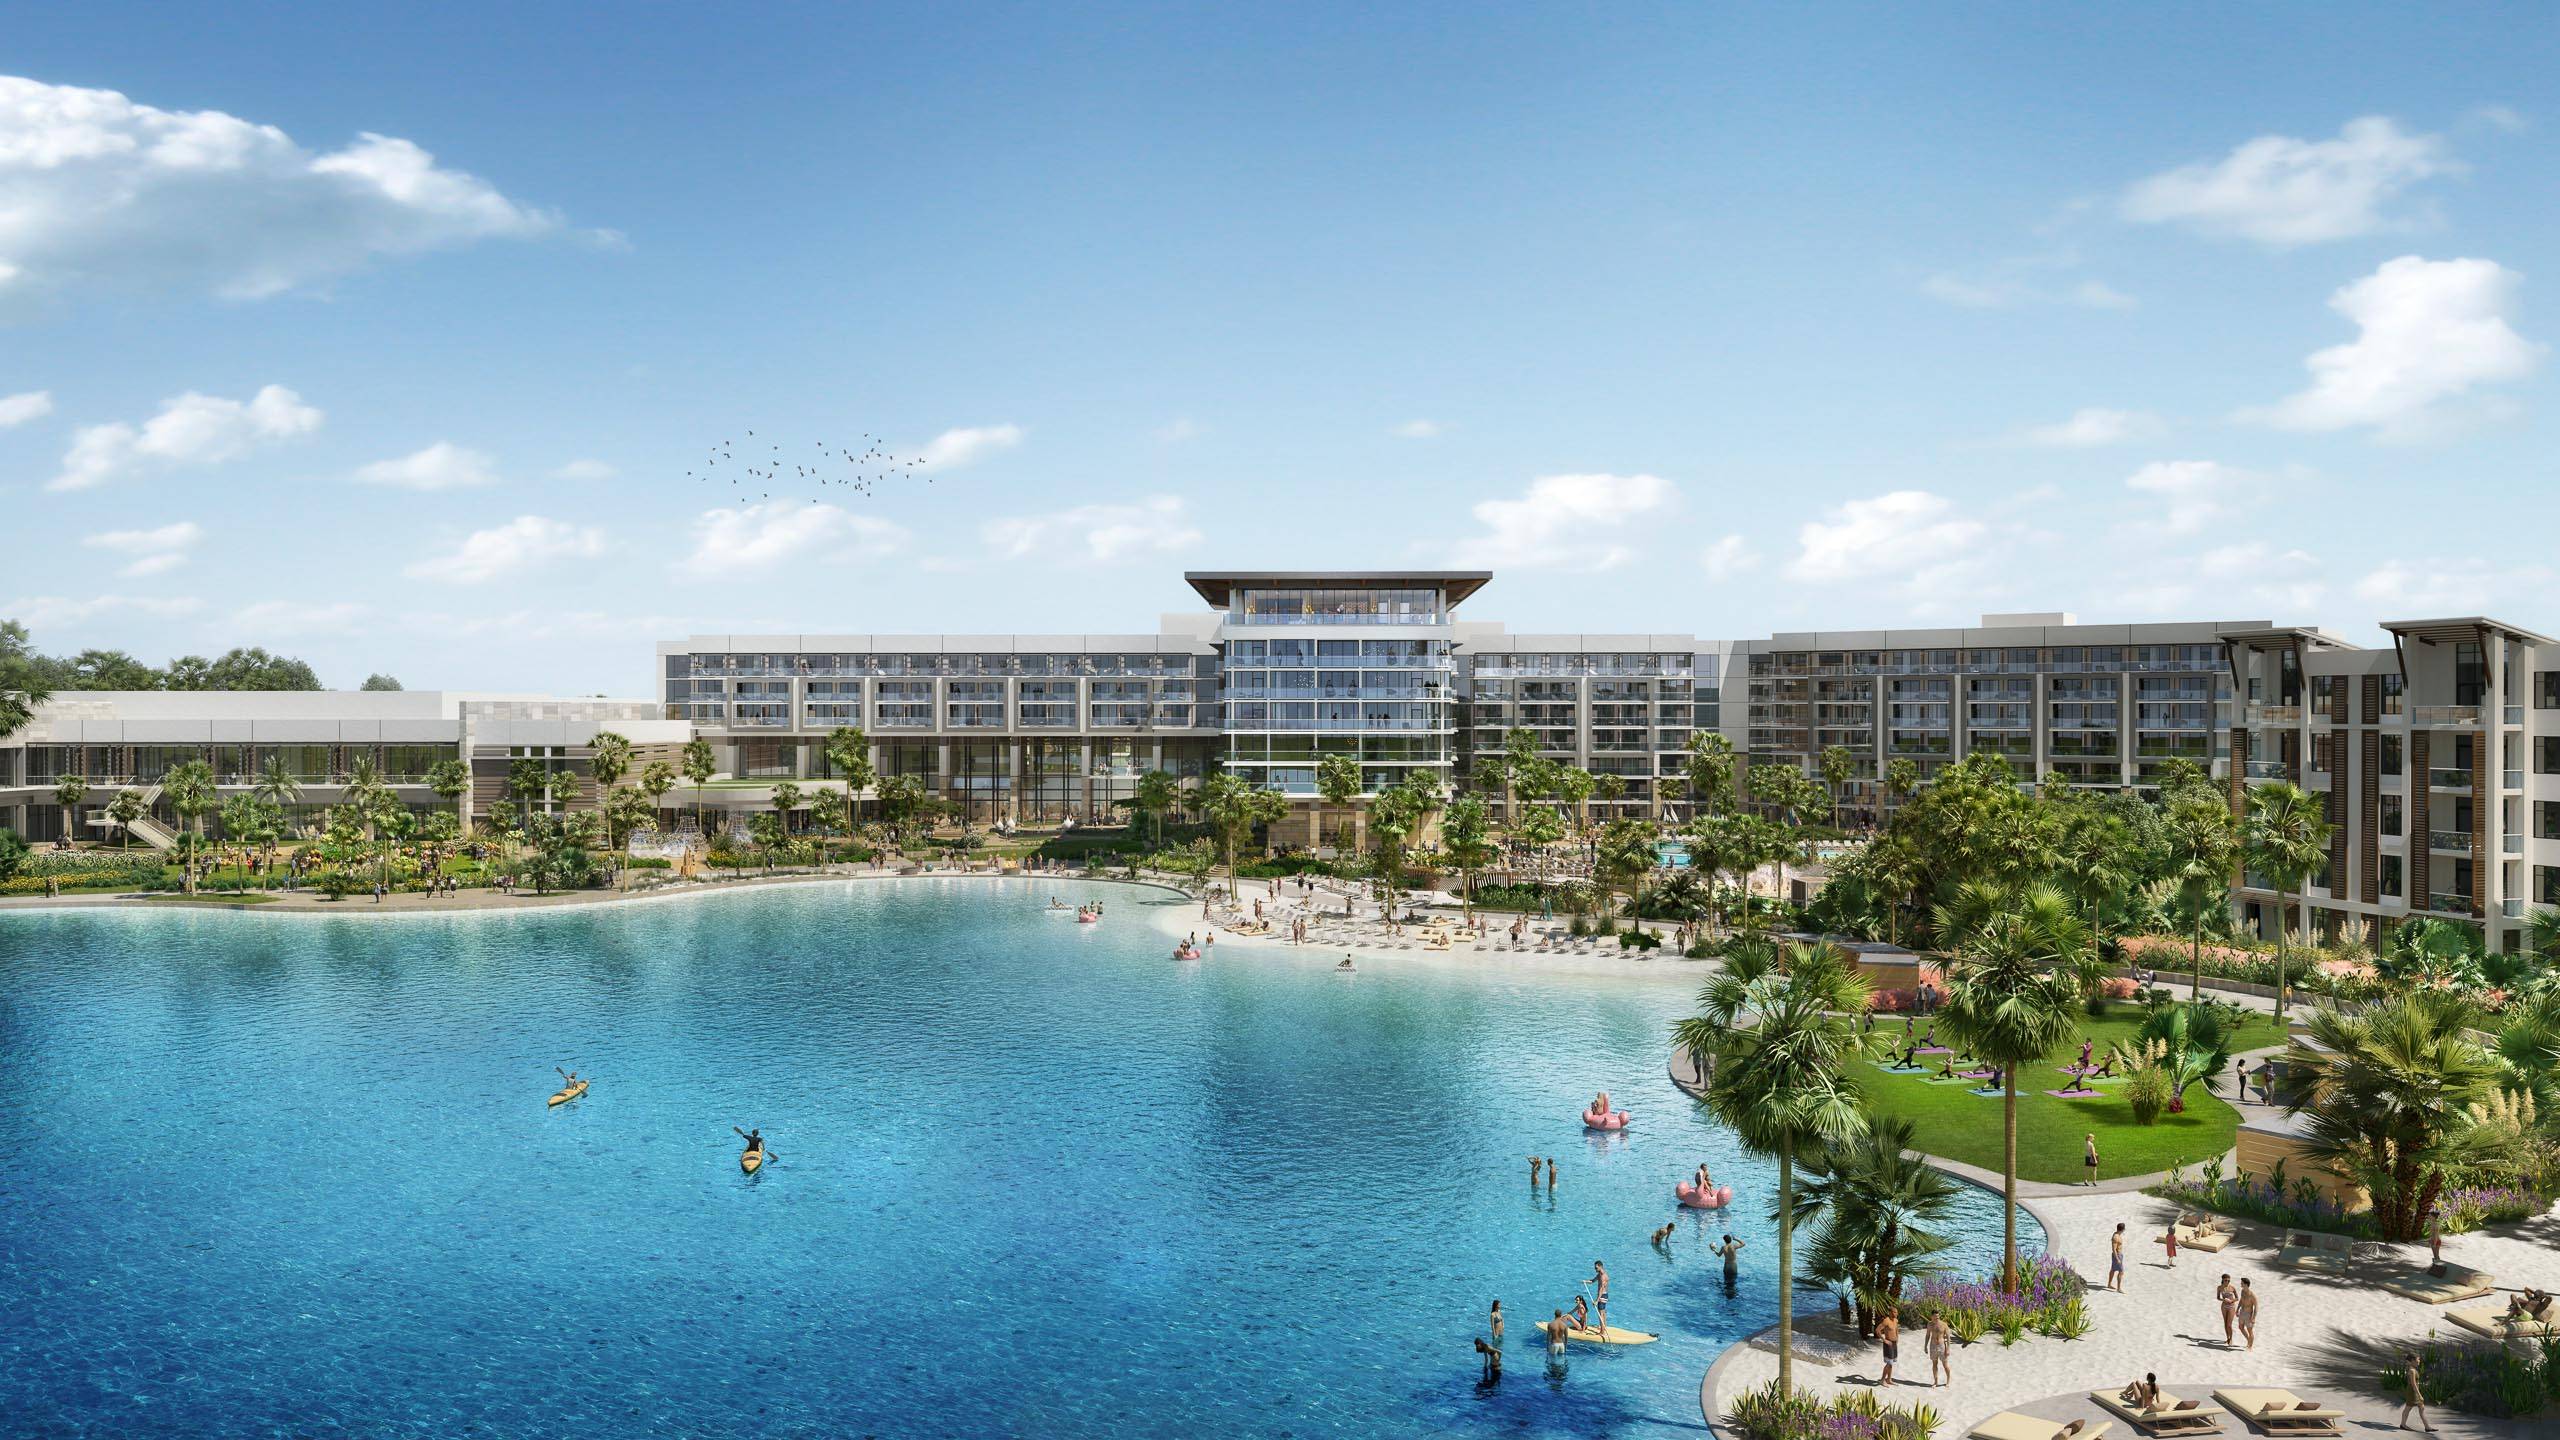 Luxury Hilton resort - Conrad Orlando at Evermore Resort - breaks ground next to Walt Disney World